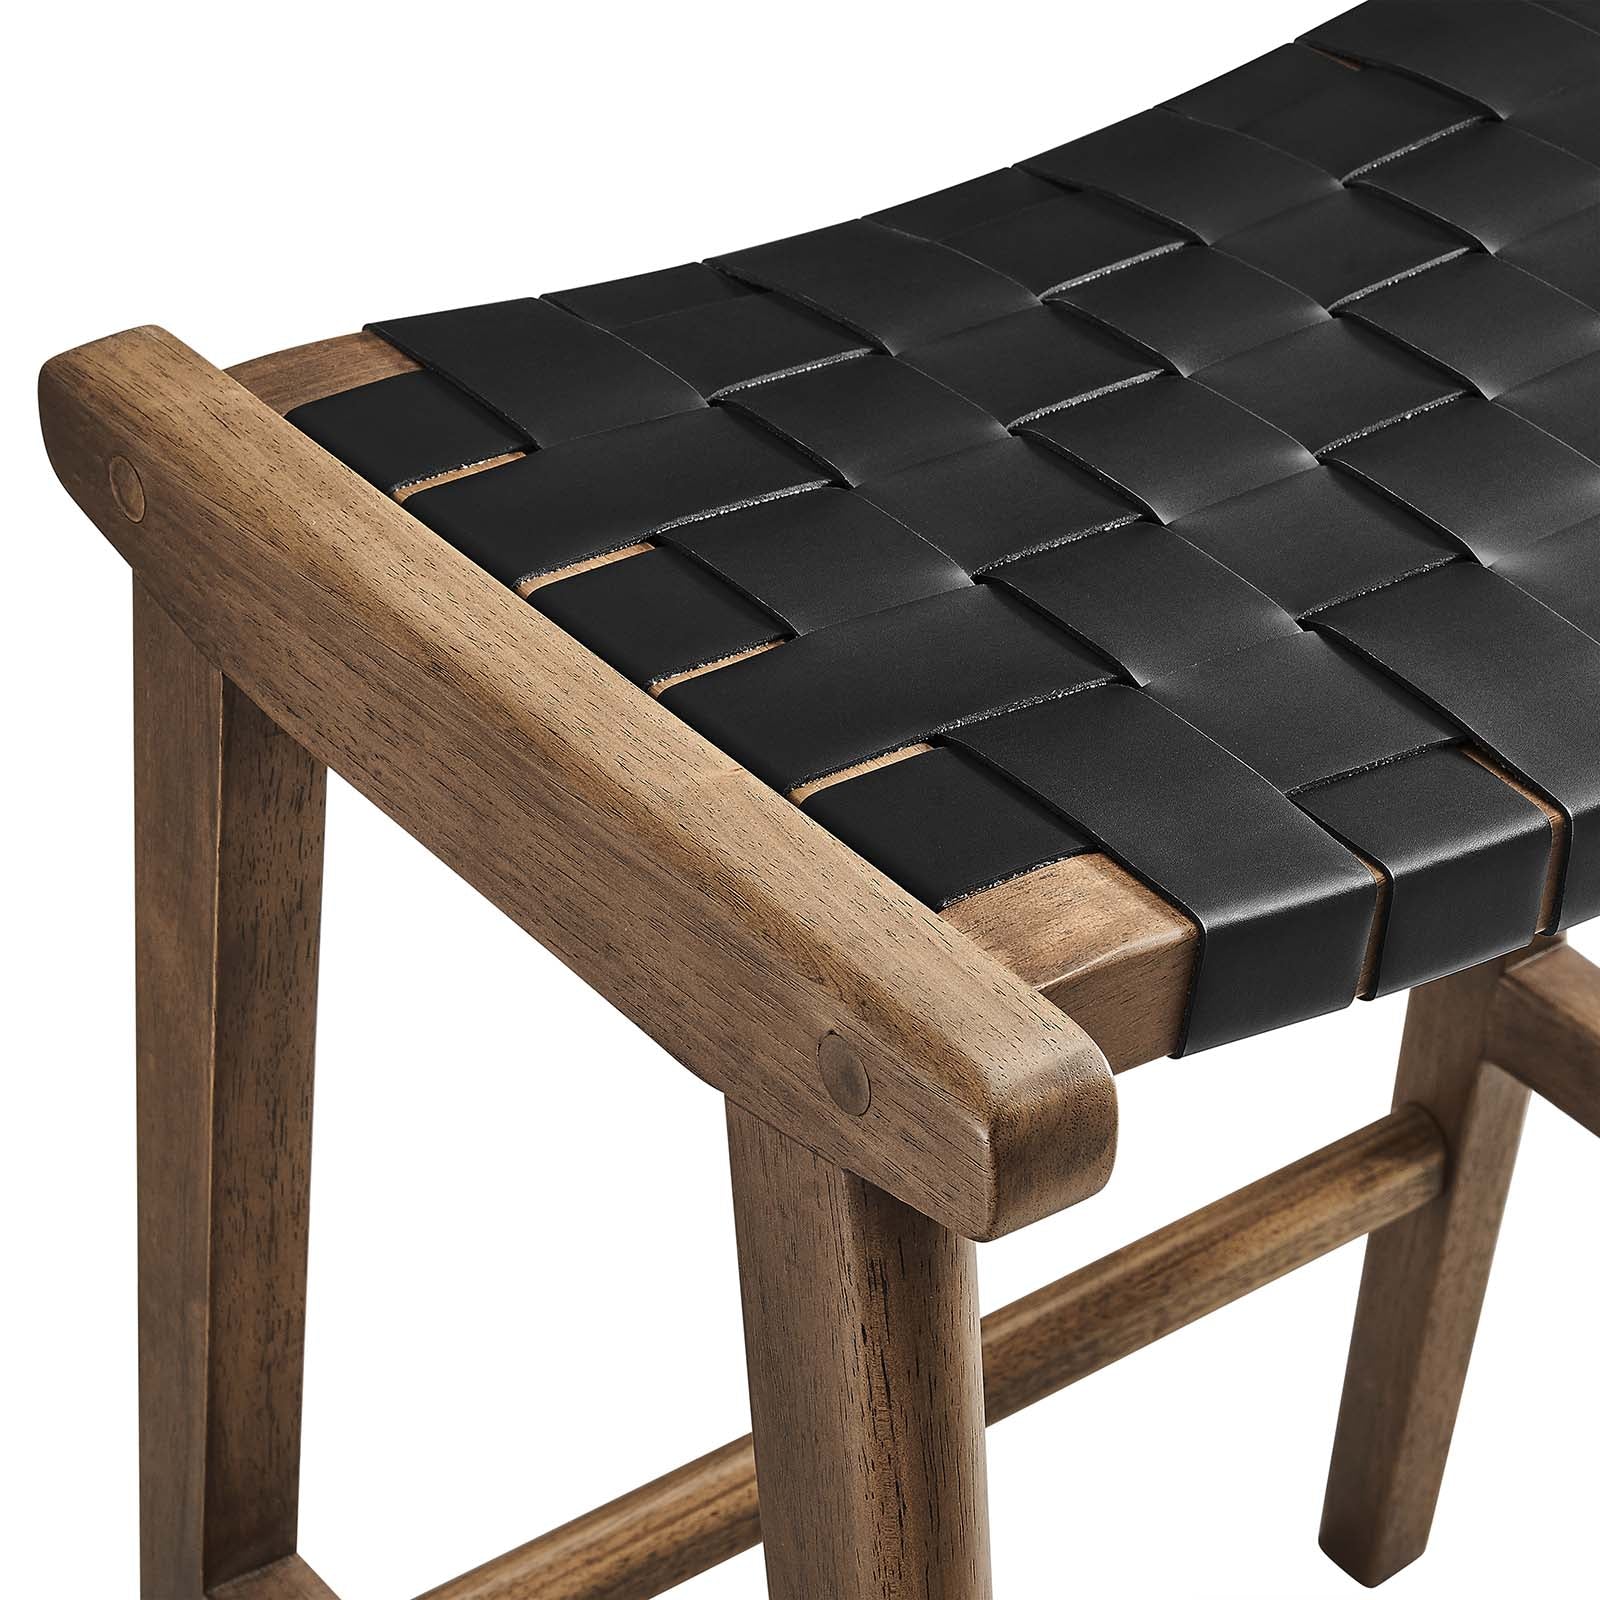 Saorise Woven Leather Wood Counter Stool - Set of 2 - East Shore Modern Home Furnishings